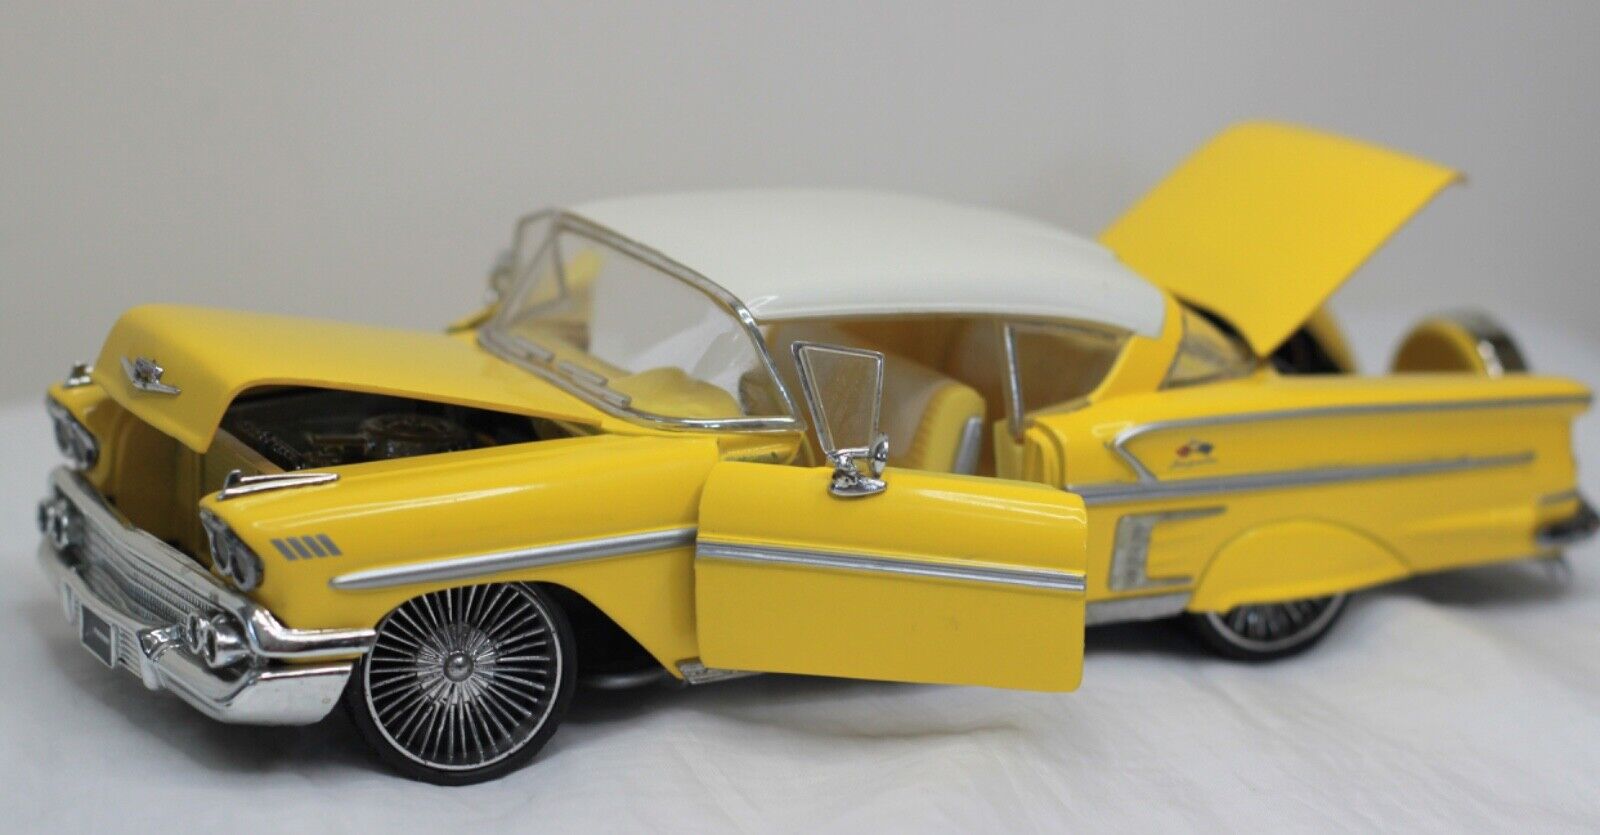 Saico 1:24 1958 Chevrolet Impala Rare Yellow Die Cast Model Cars